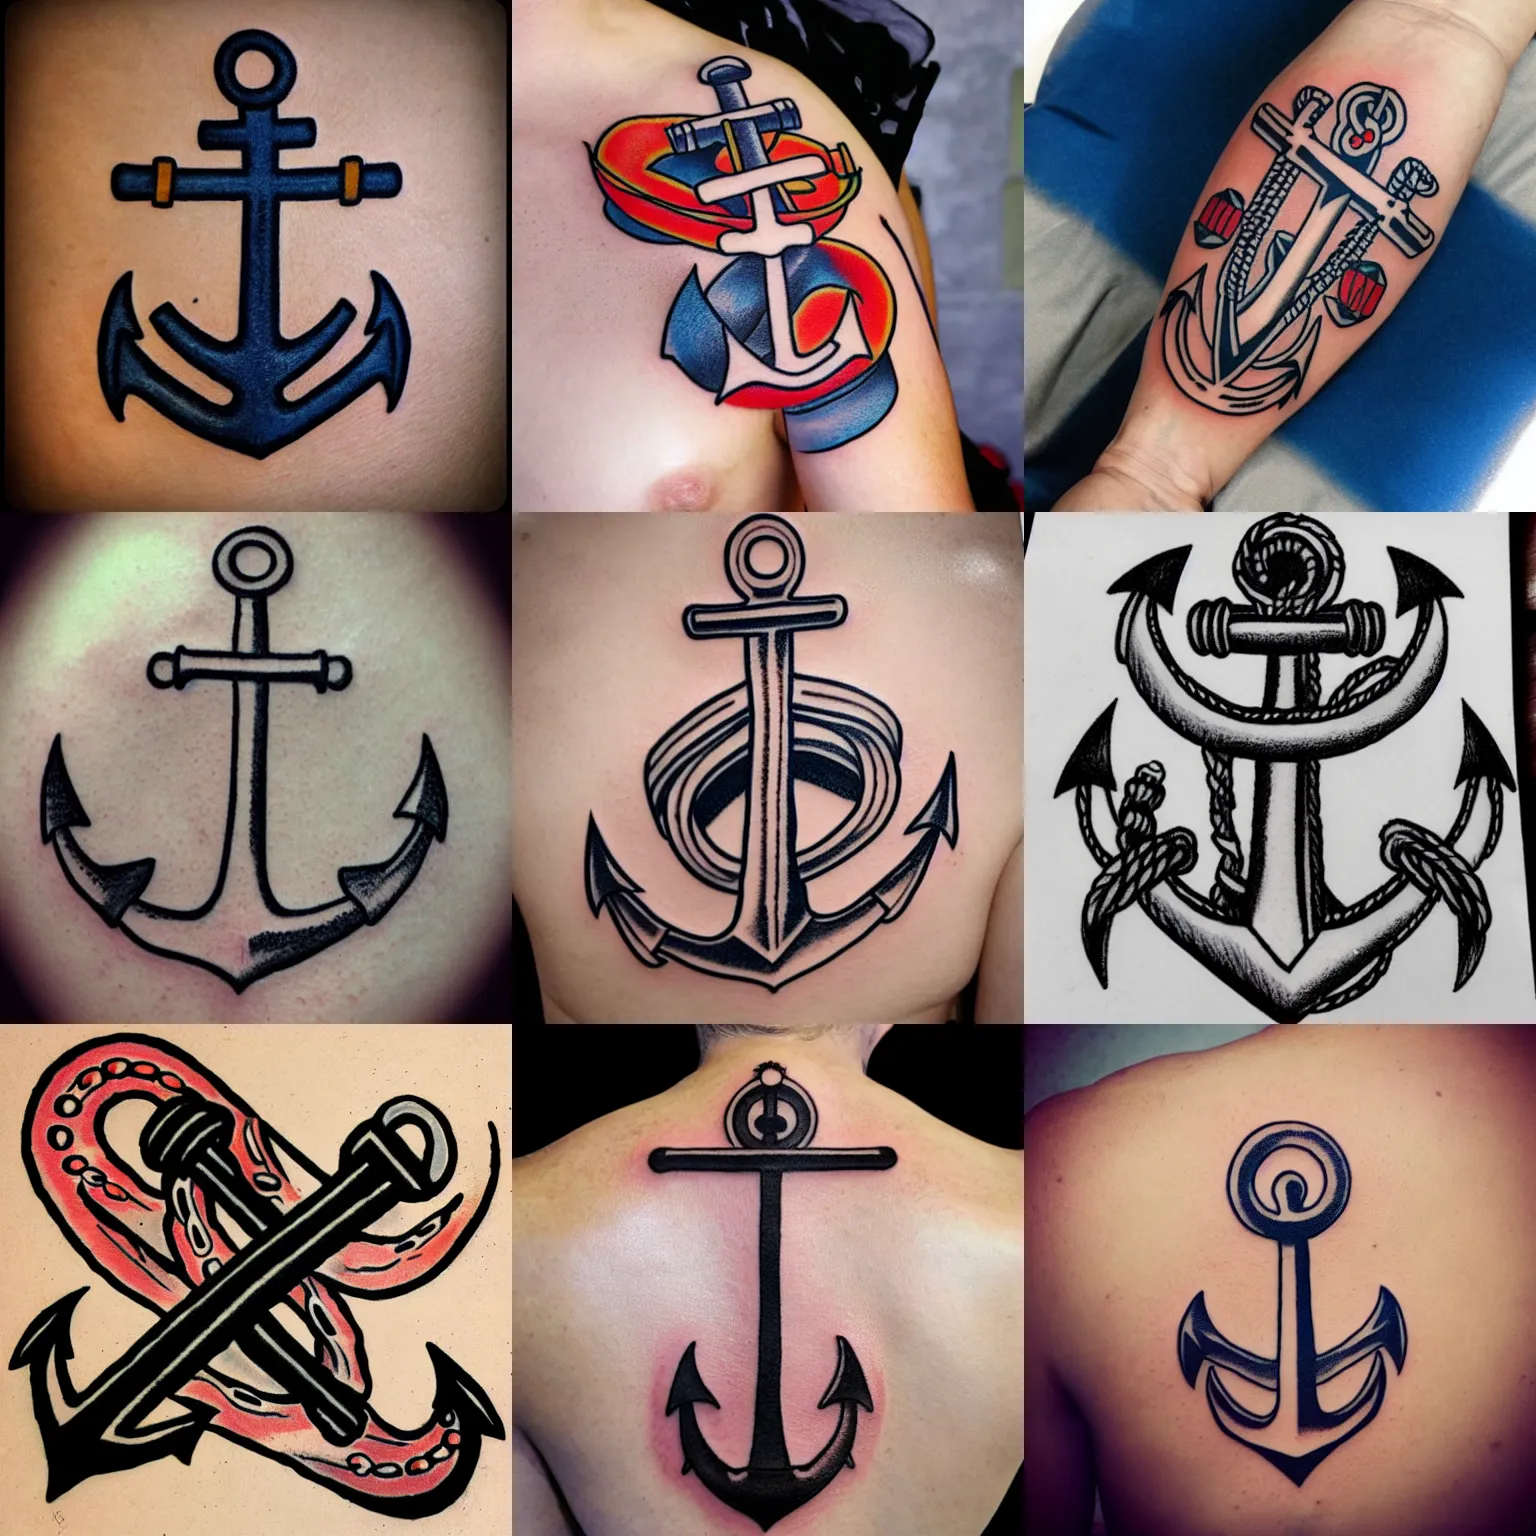 Anchor Tattoo Temporary Anchor Sailor Boat Anchor Temporary Tattoos | eBay